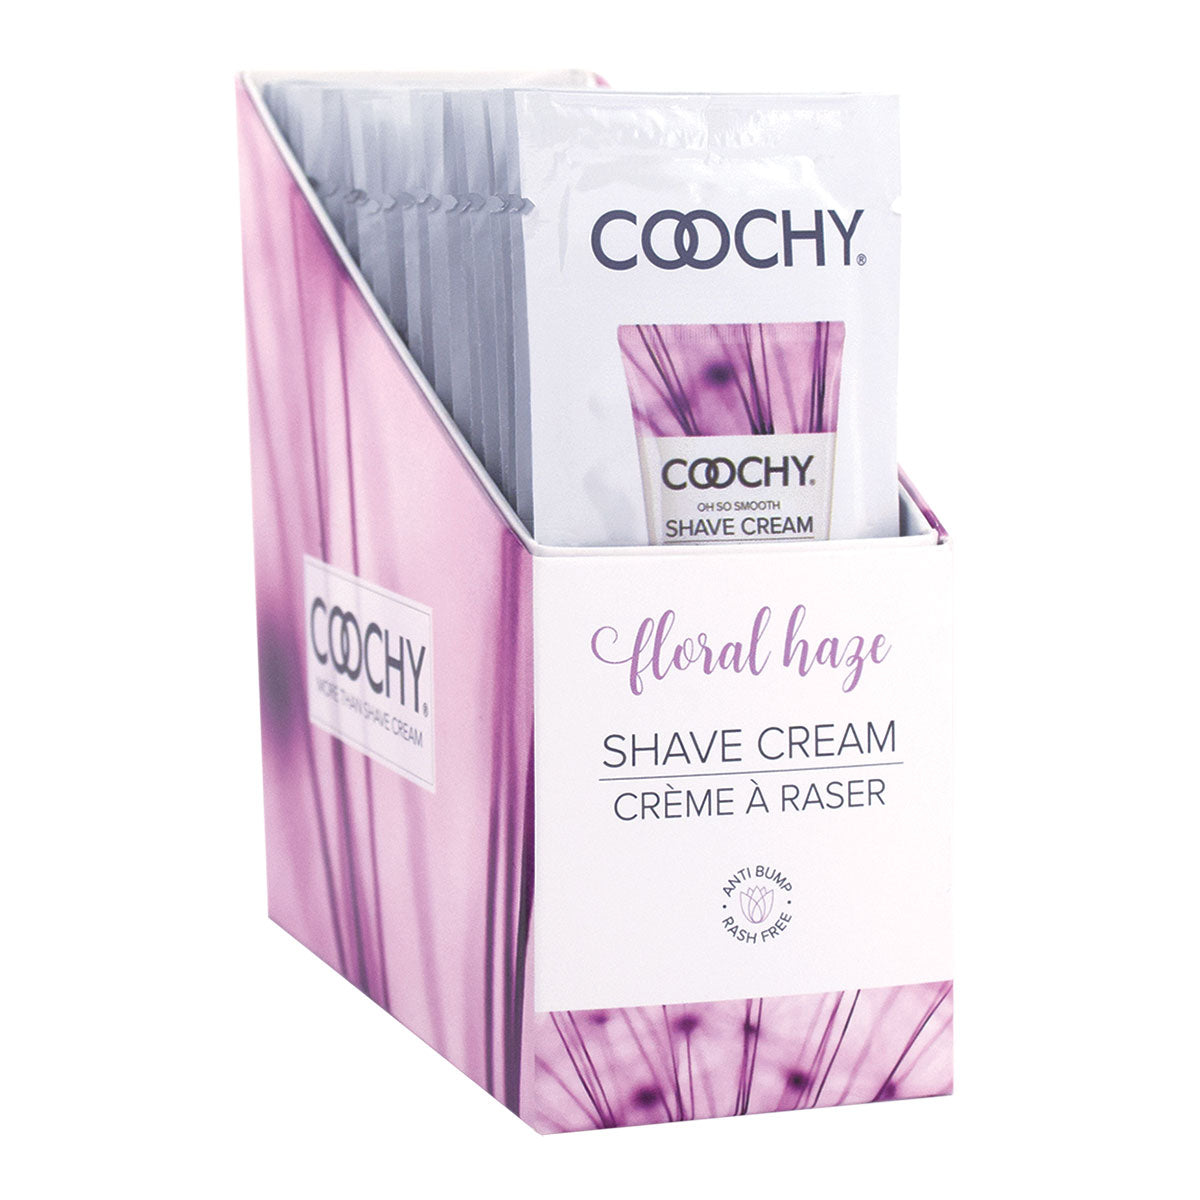 Coochy Shave Cream 15ml. 24pc. Display - Floral Haze [A01817]